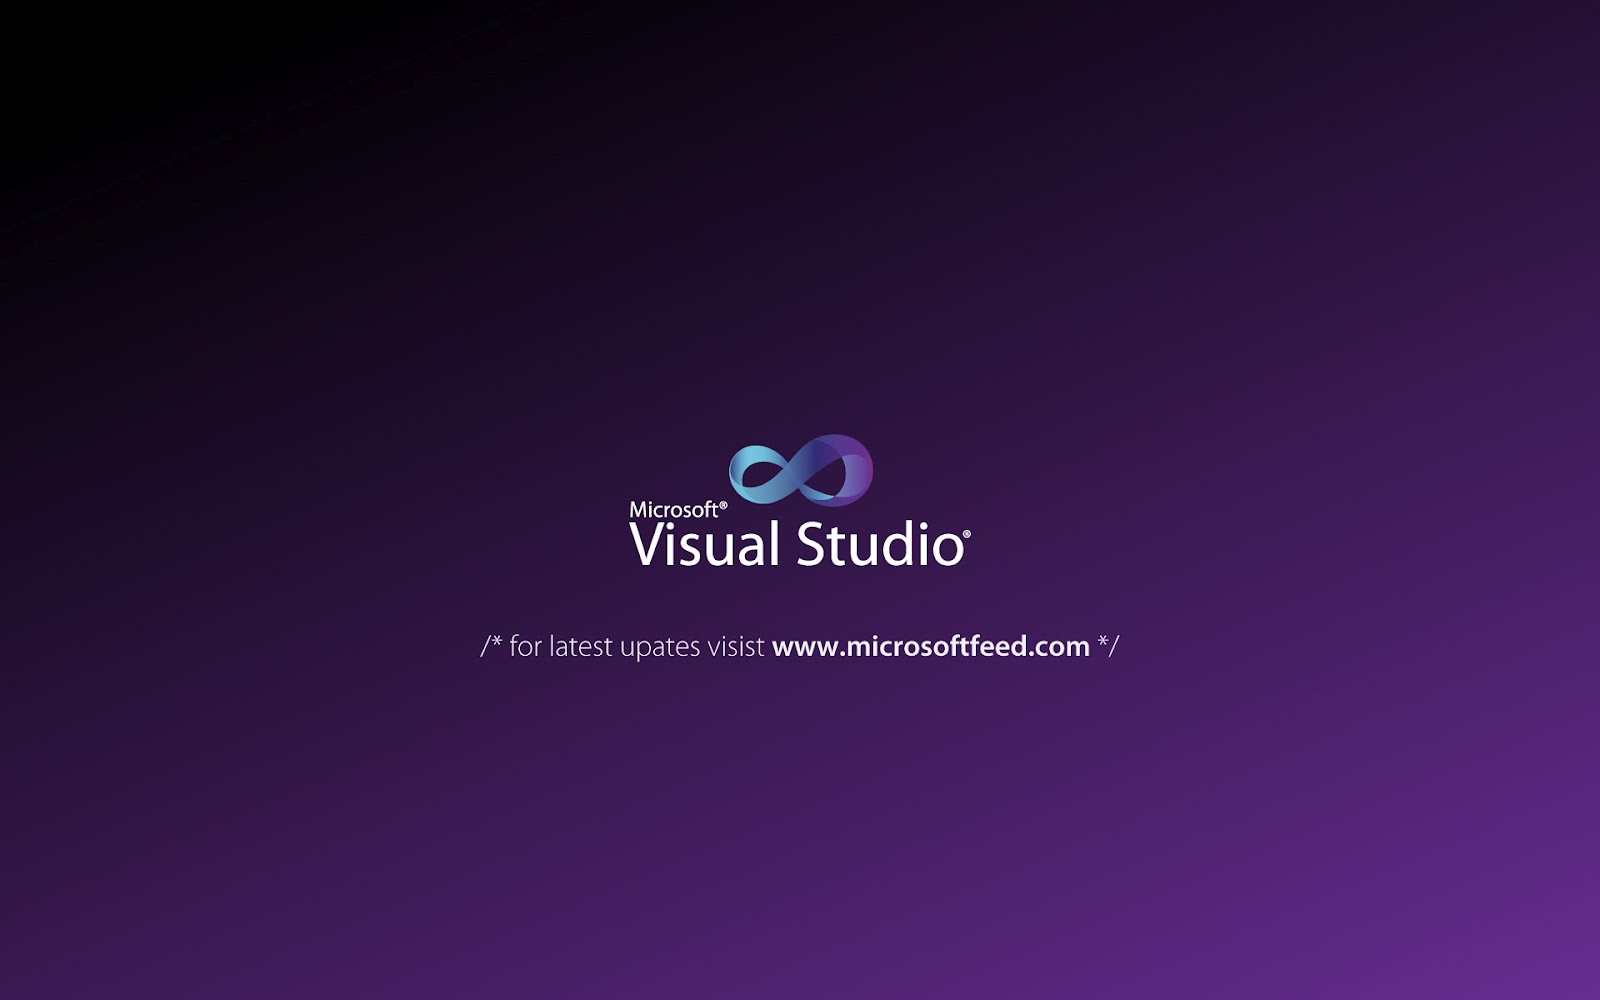 Windows Live Messenger HD Microsoft Visual Studio Wallpaper